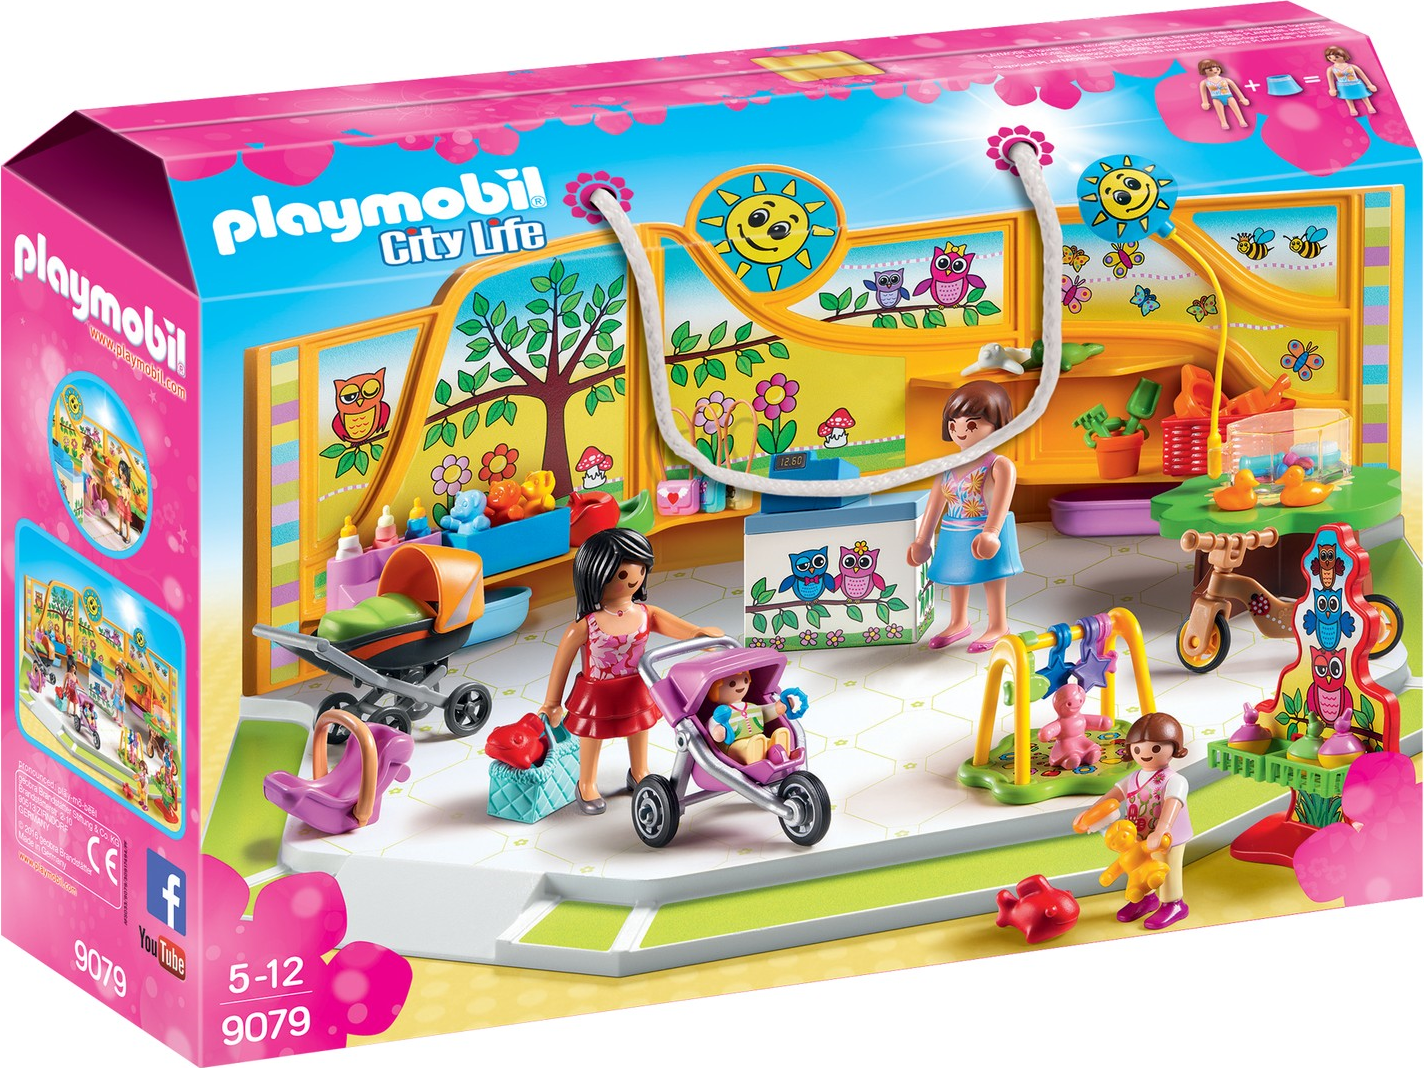 Playmobil City Life 9079 Spielzeug-Set (9079)